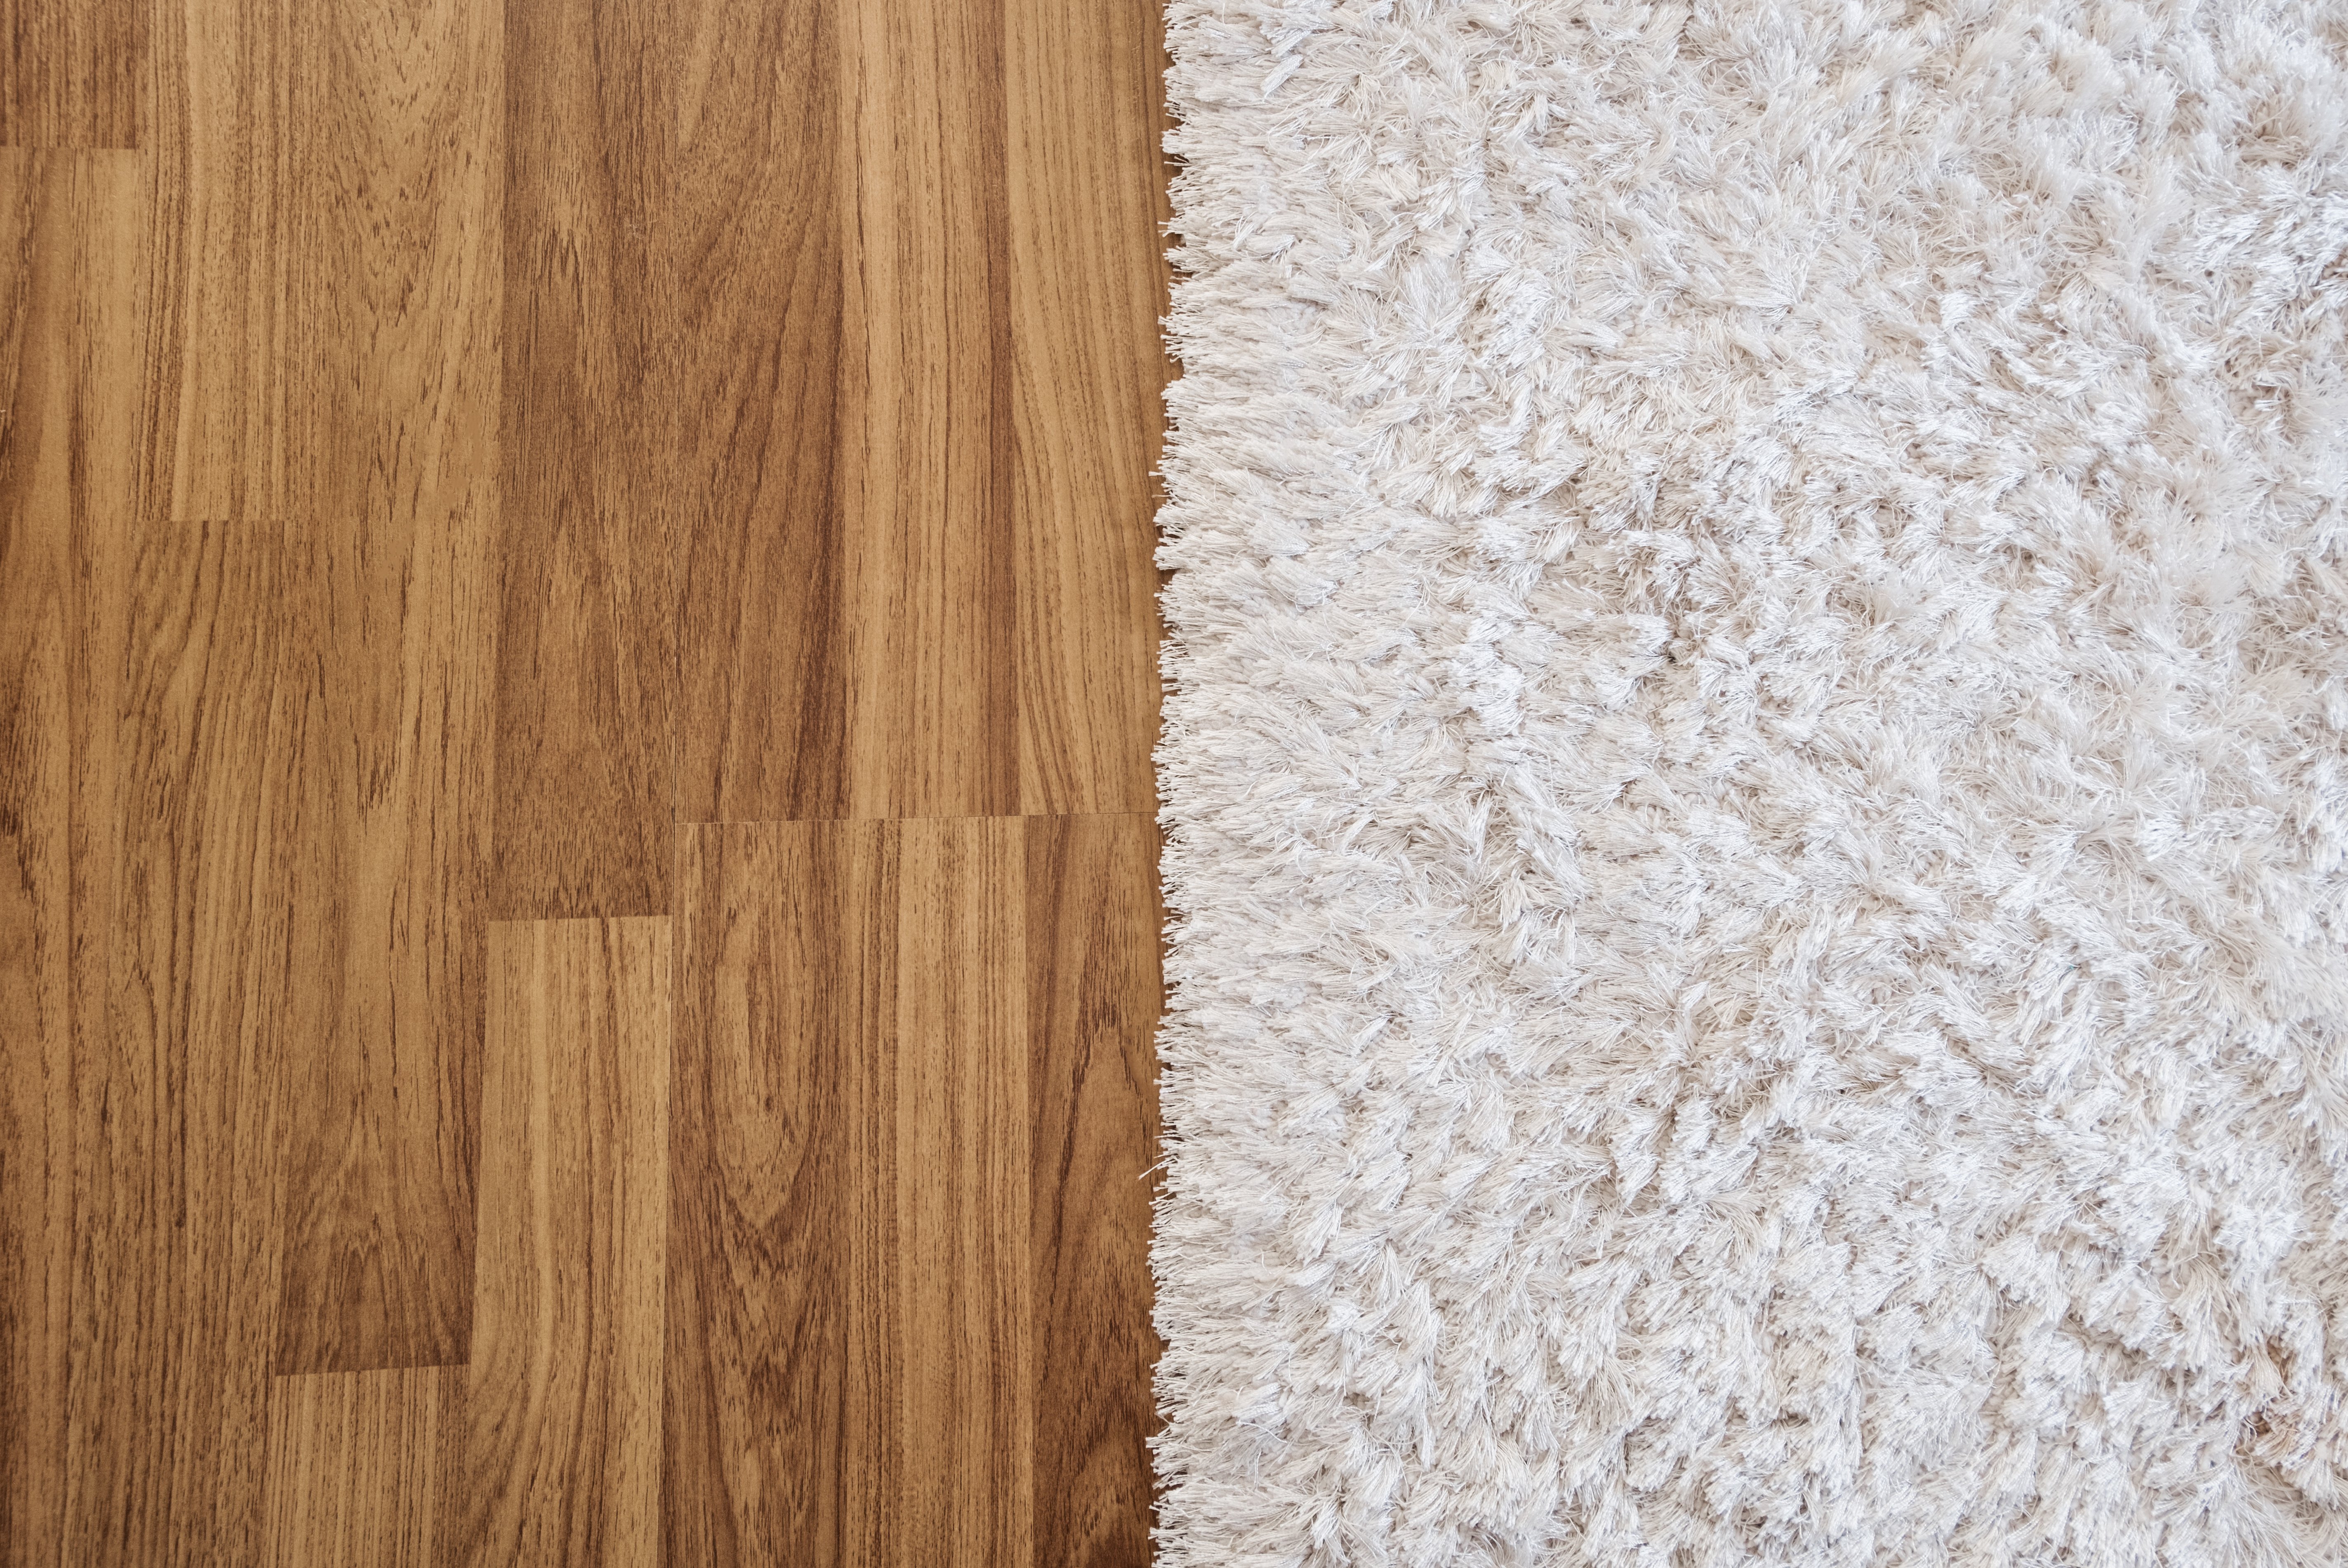 White rug on hardwood flooring - Carpet binding services from C G Interiors in San Leandro, CA